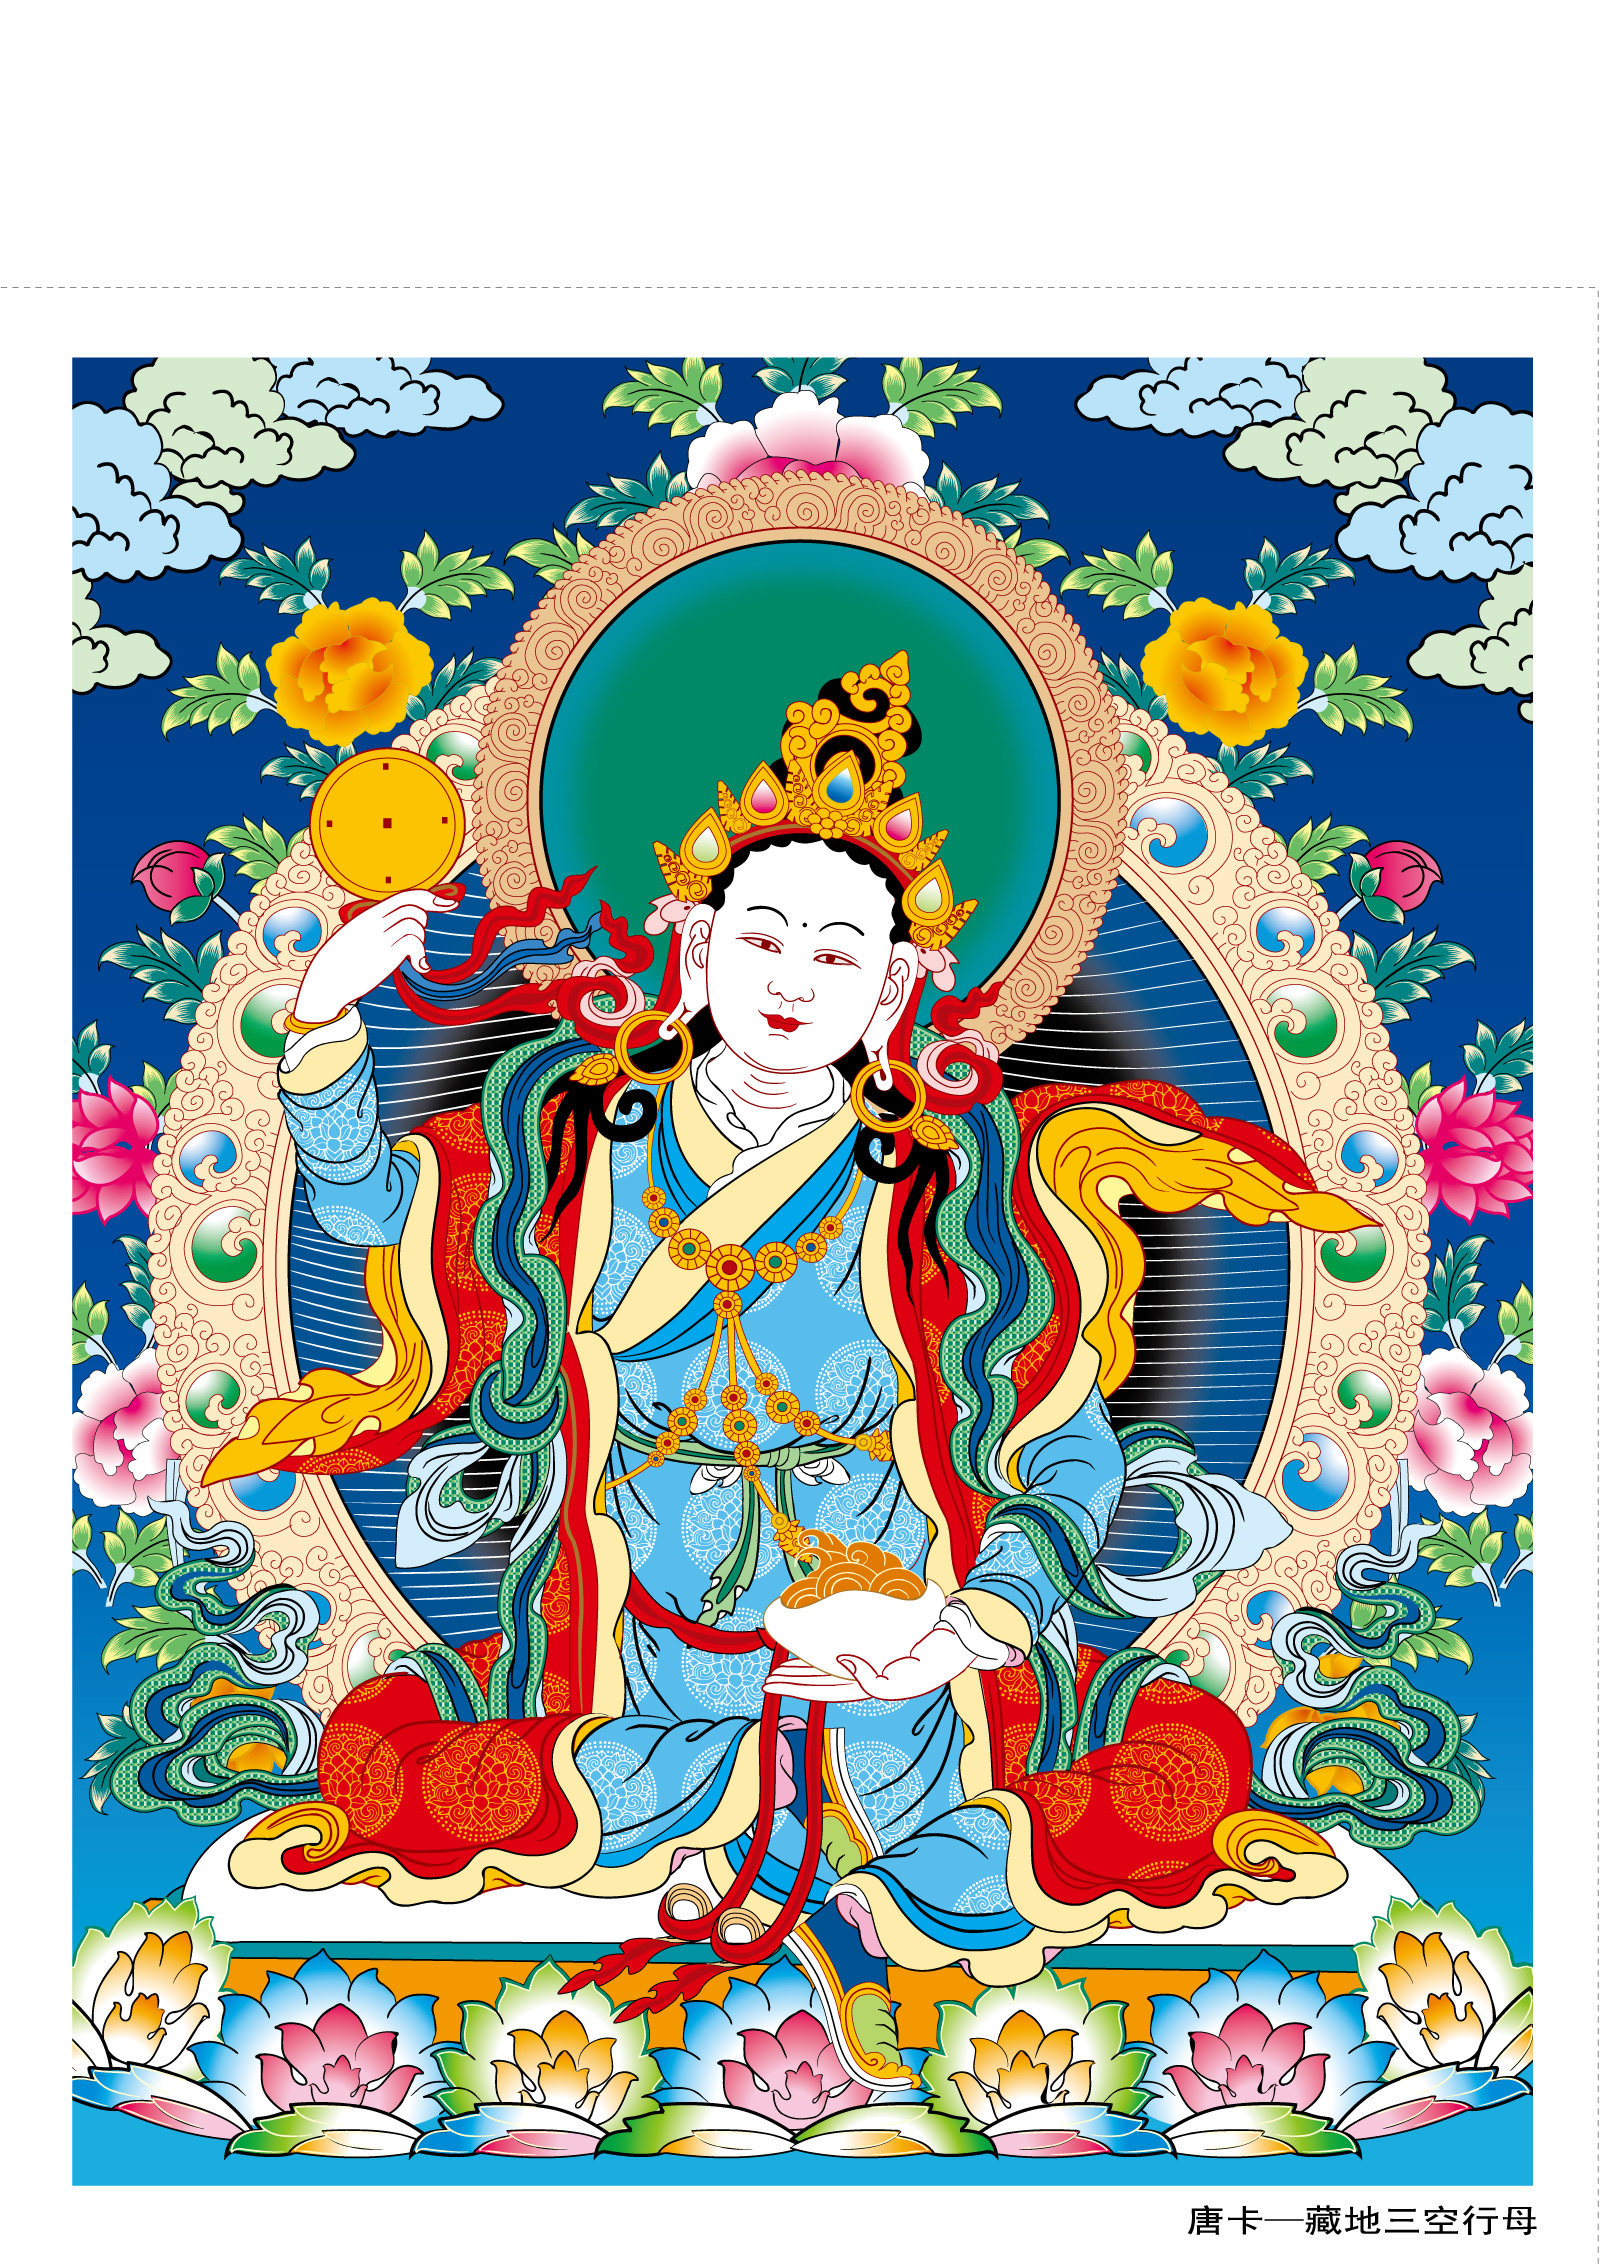 Chinese Tibetan Buddhism Buddha image vector material - China Illustrations Vectors AI ESP Free Download